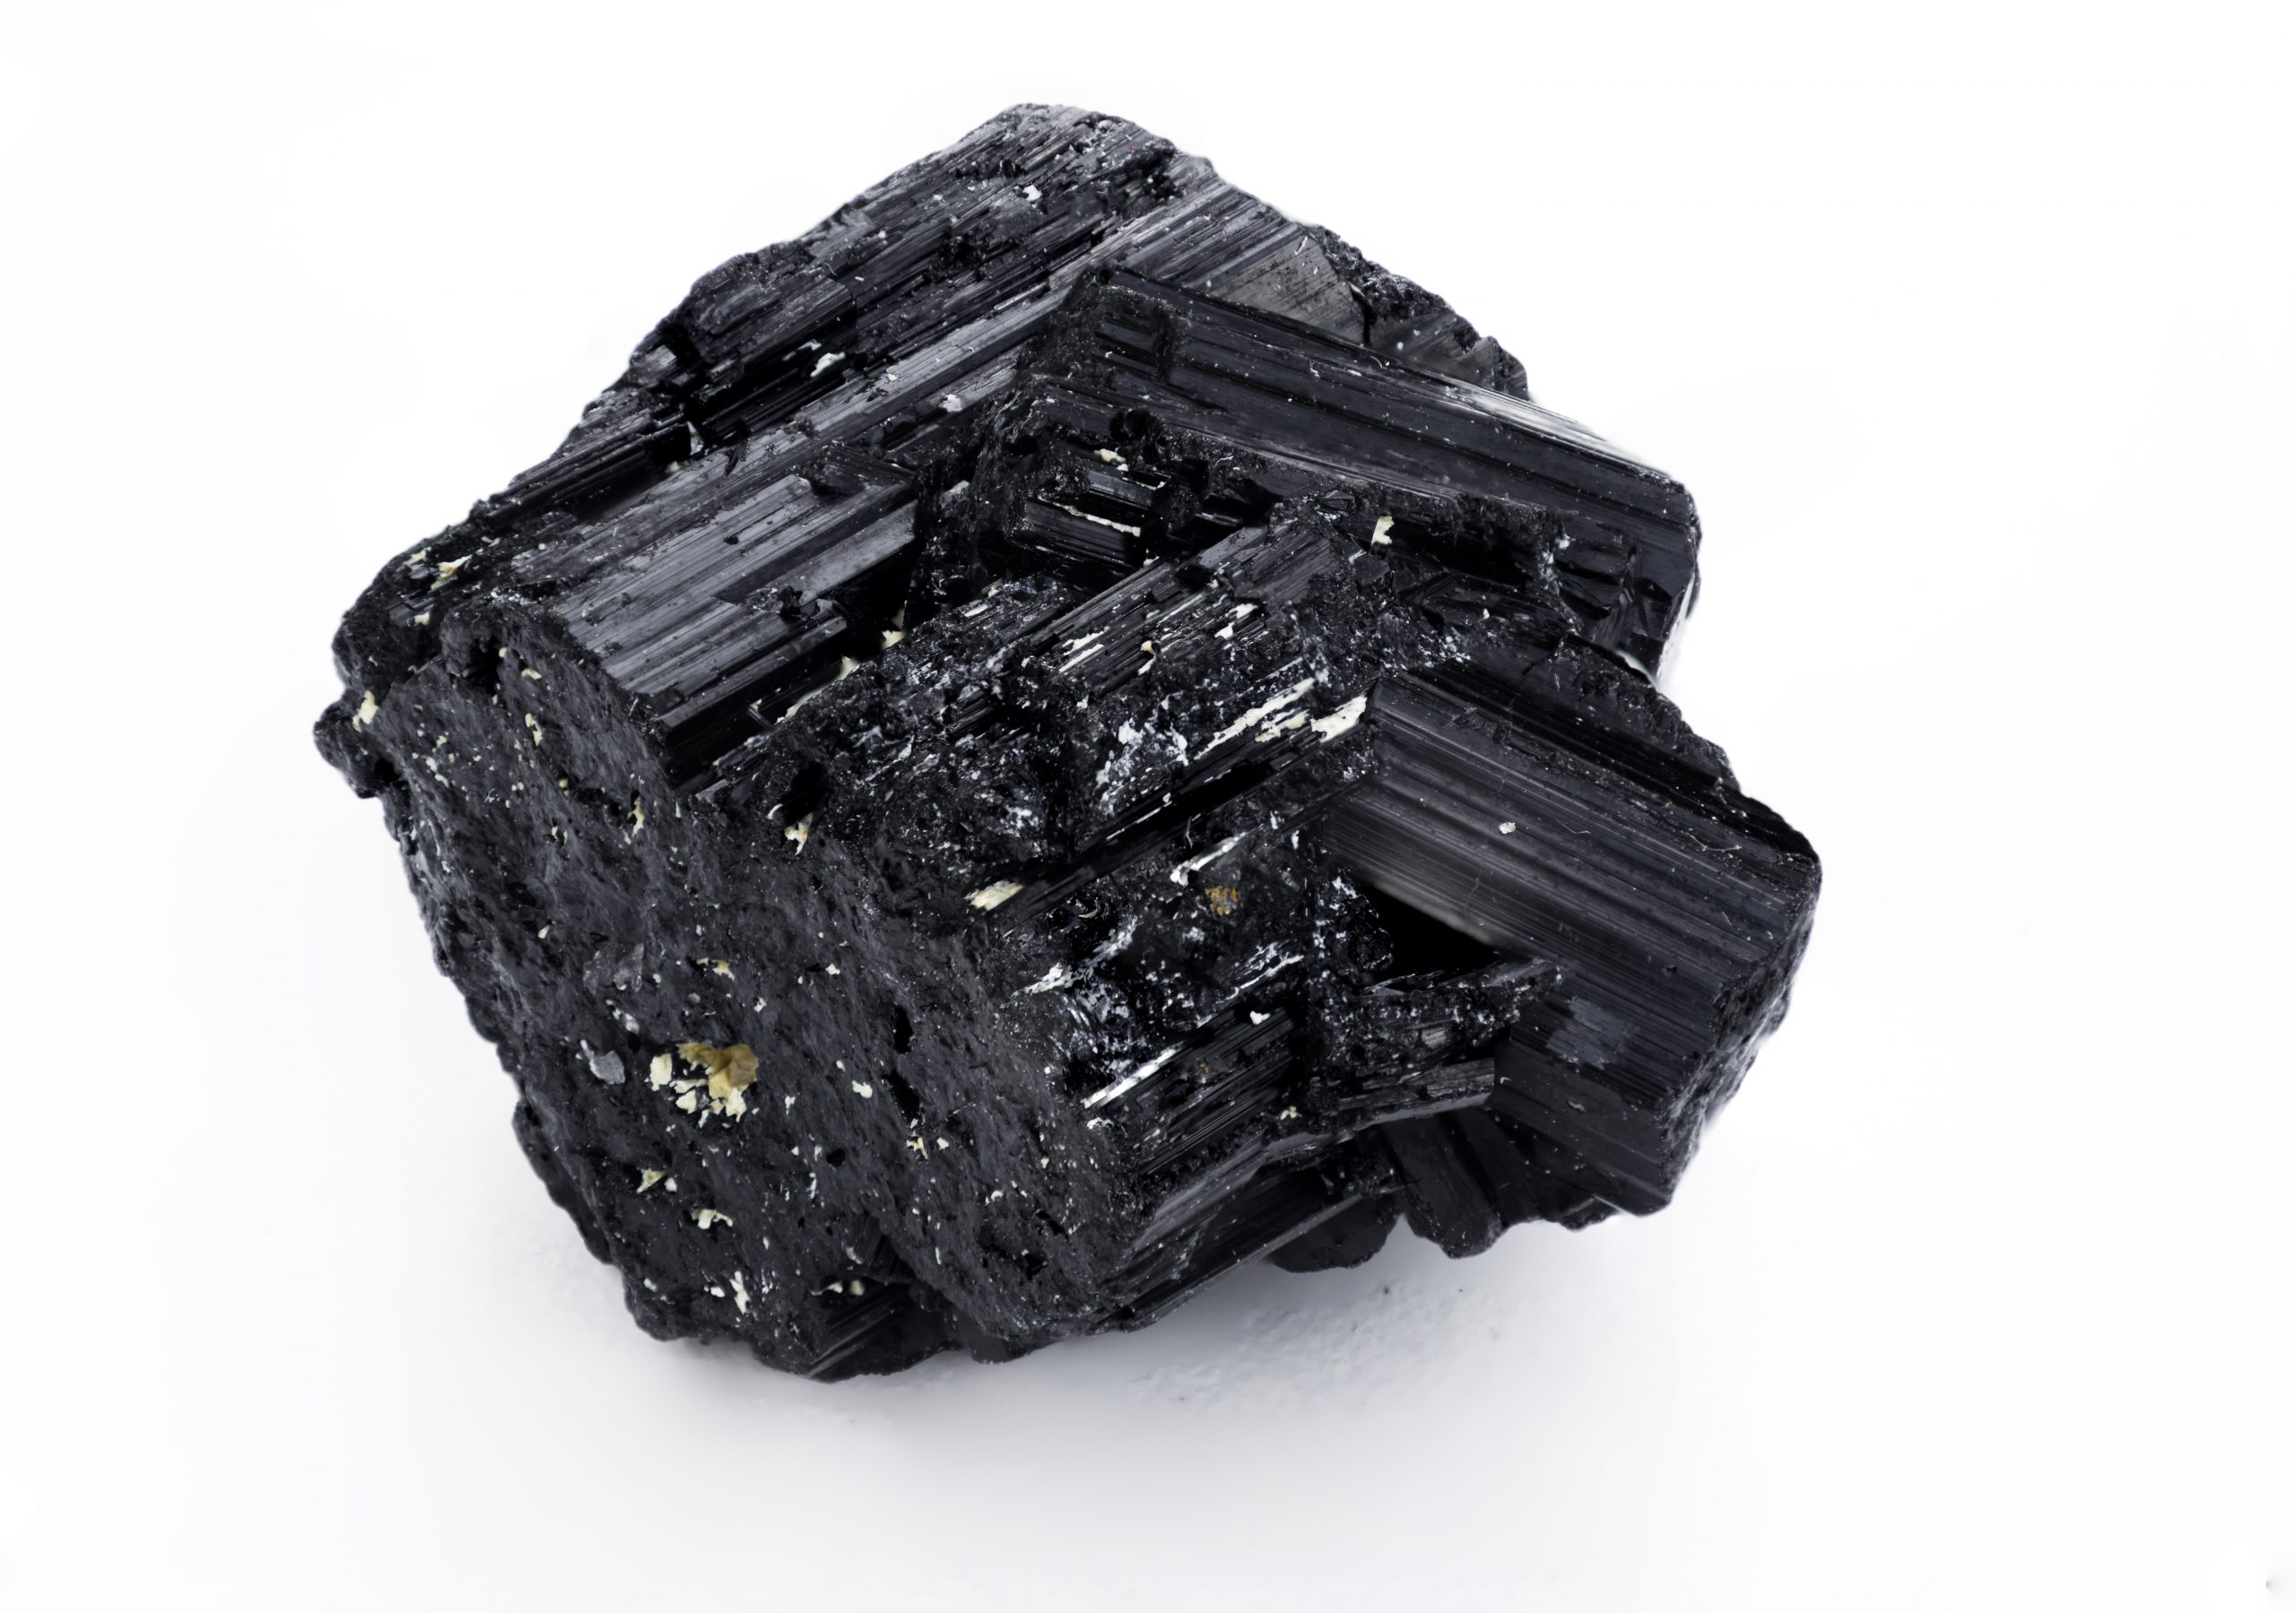 Black tourmaline mineral